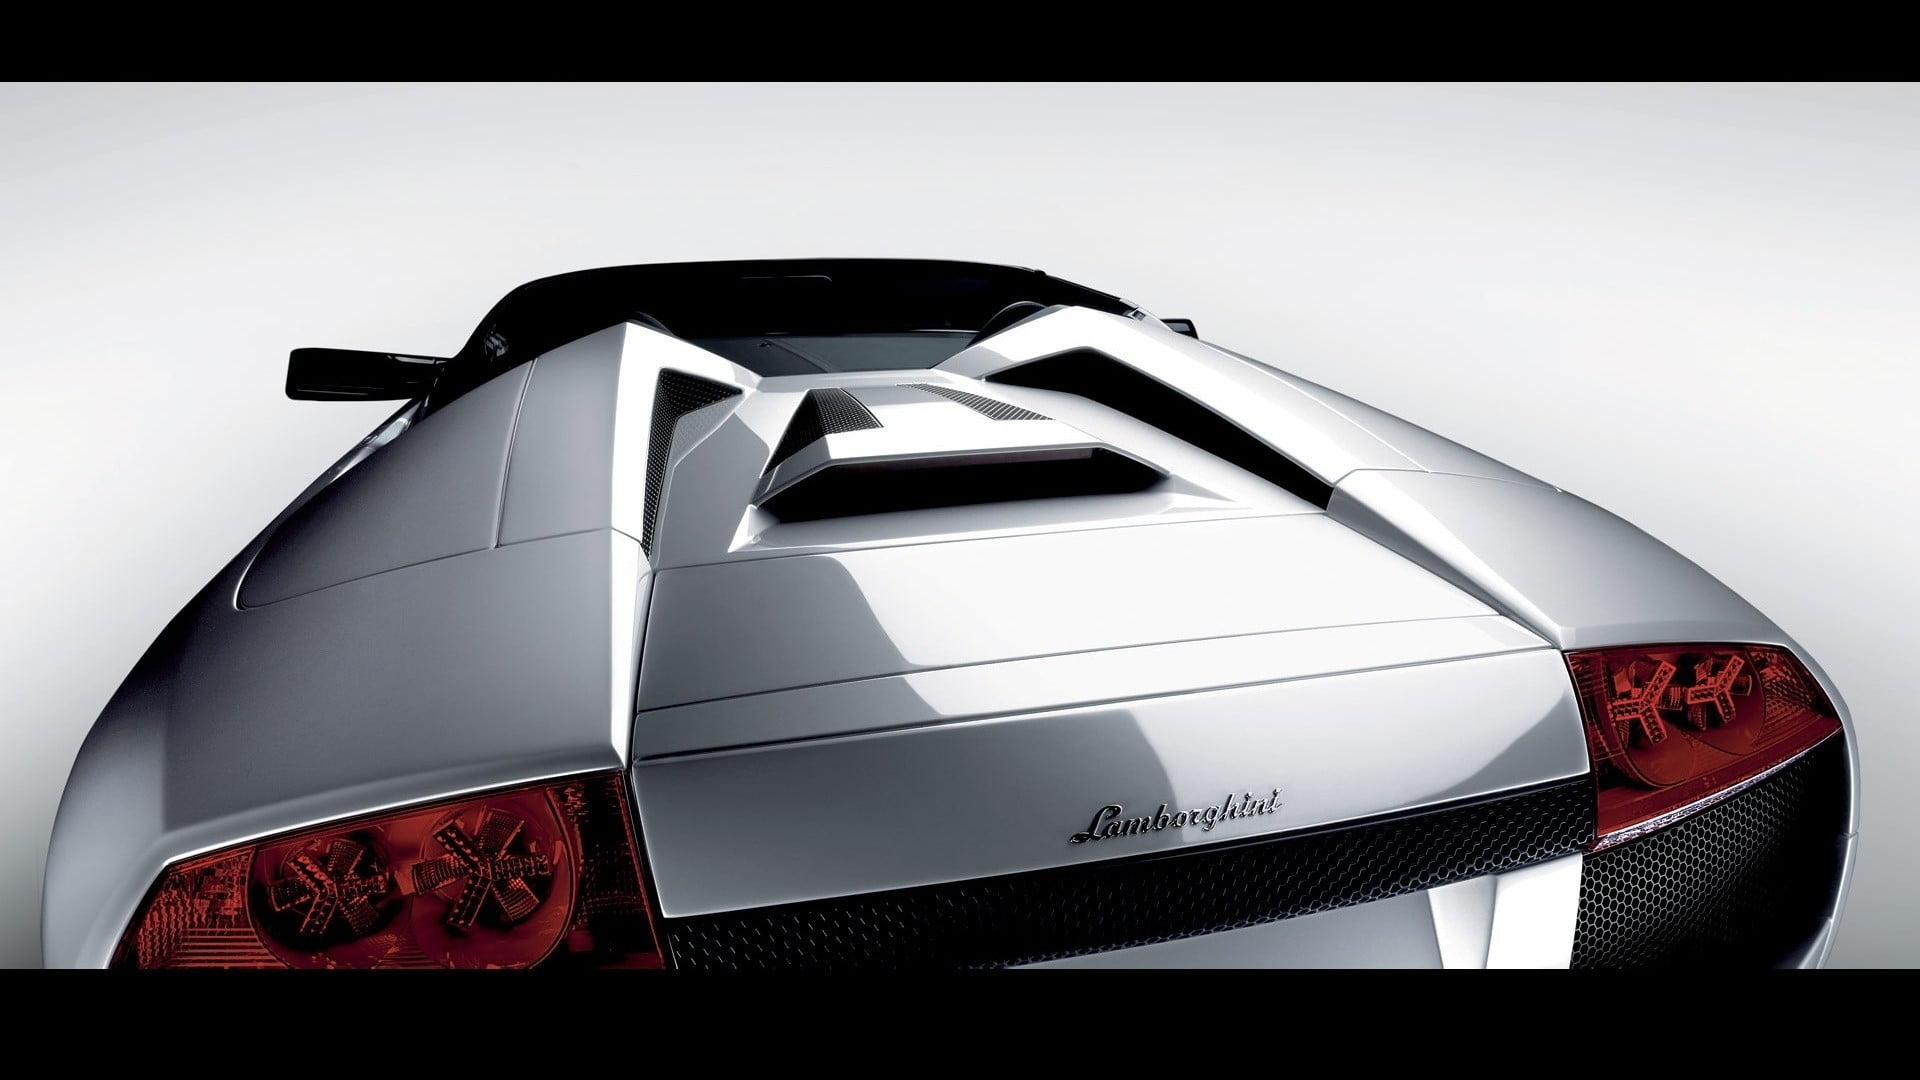 black and white HP desktop printer, car, Lamborghini, mode of transportation